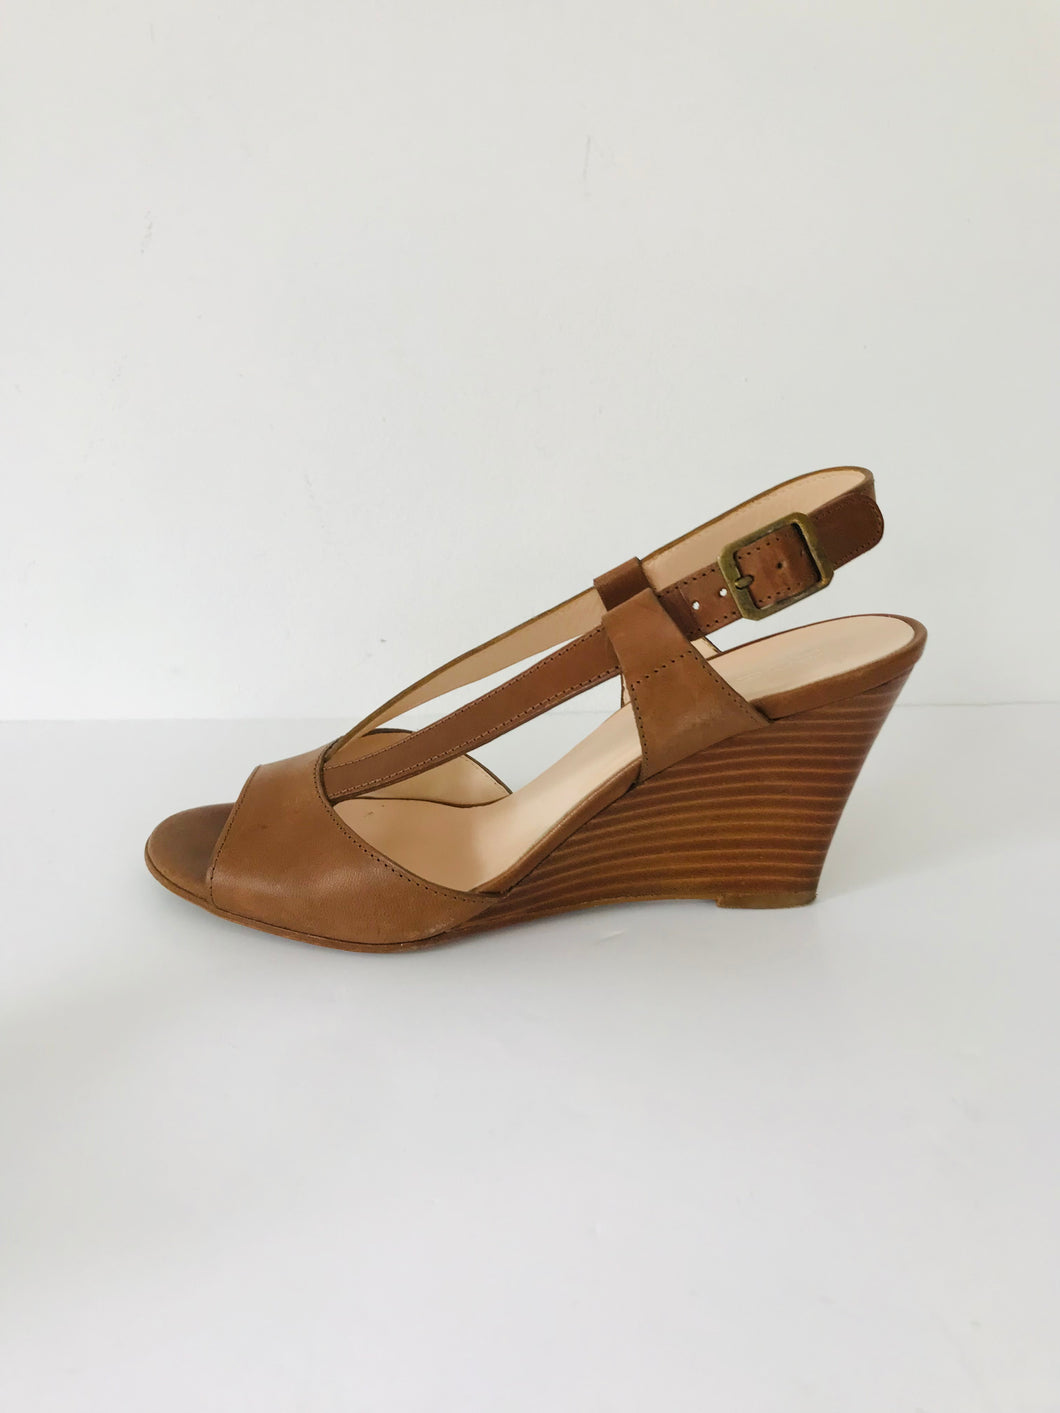 Hobbs Women's Leather Wedge Sandals | 38 UK5 | Brown